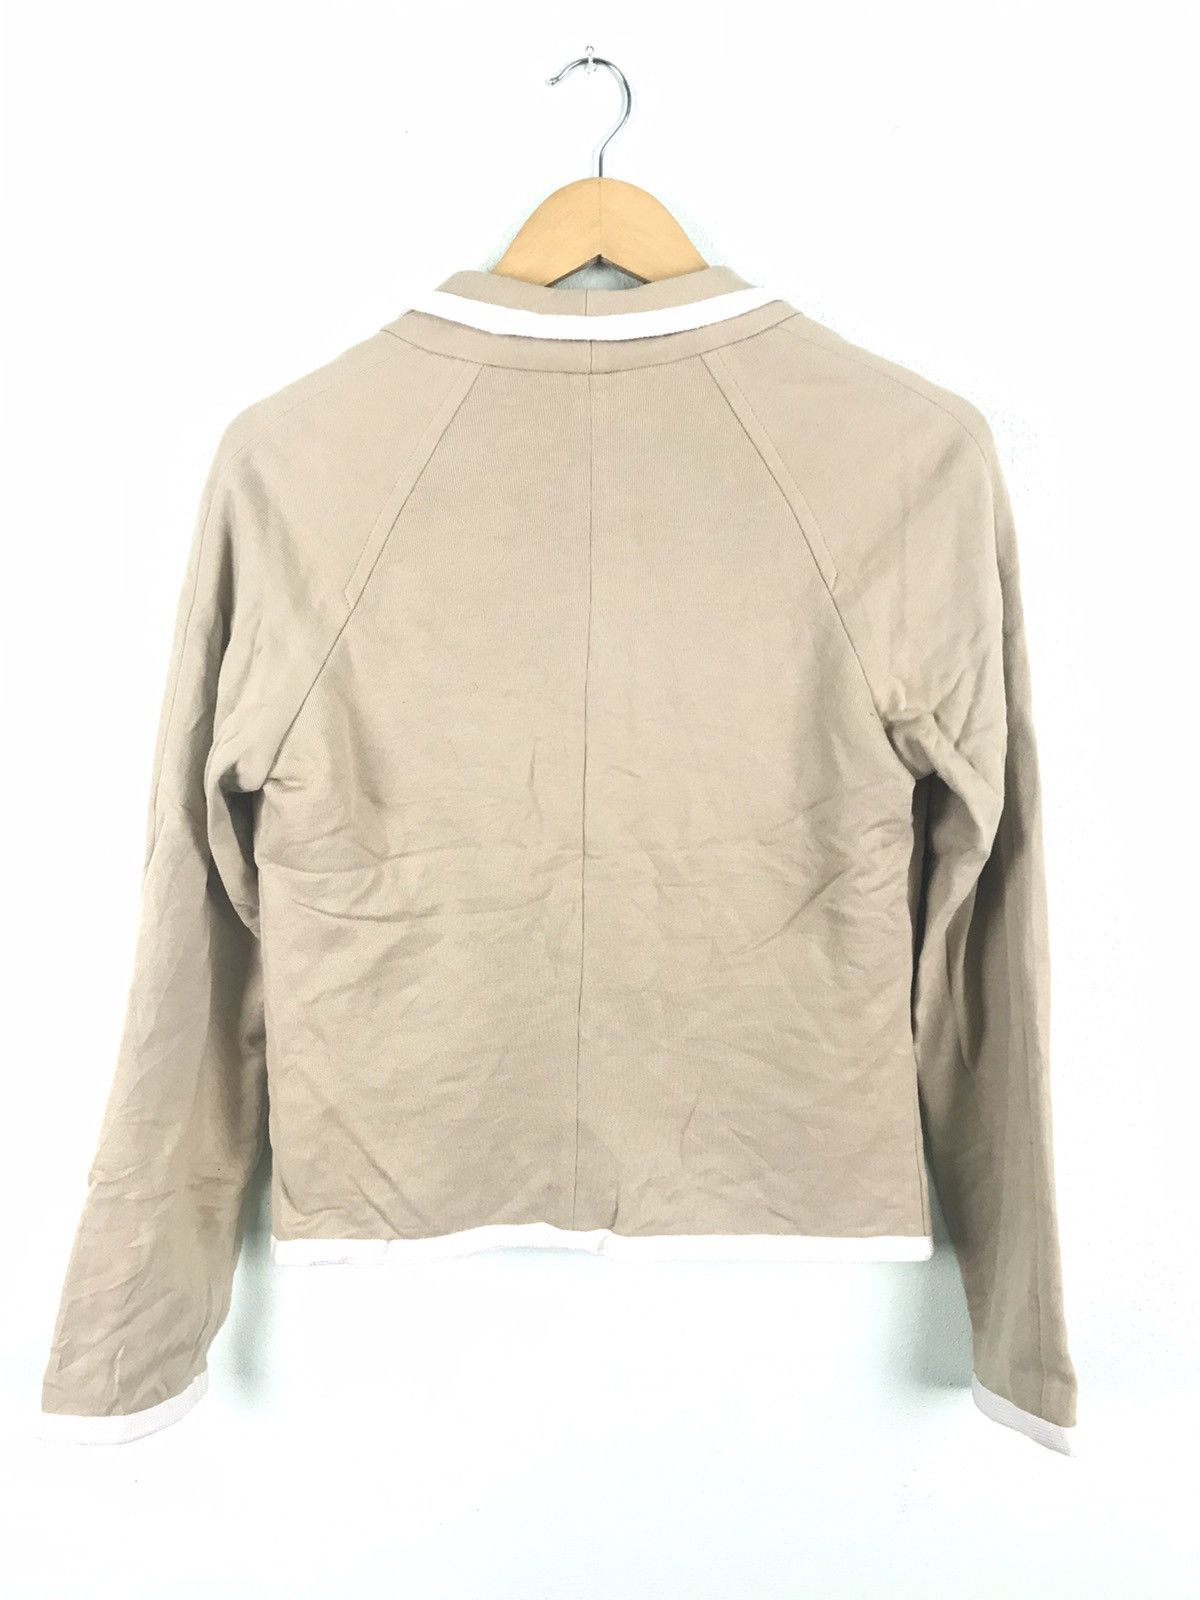 Lacoste big logo jacket - GH1019 - 4